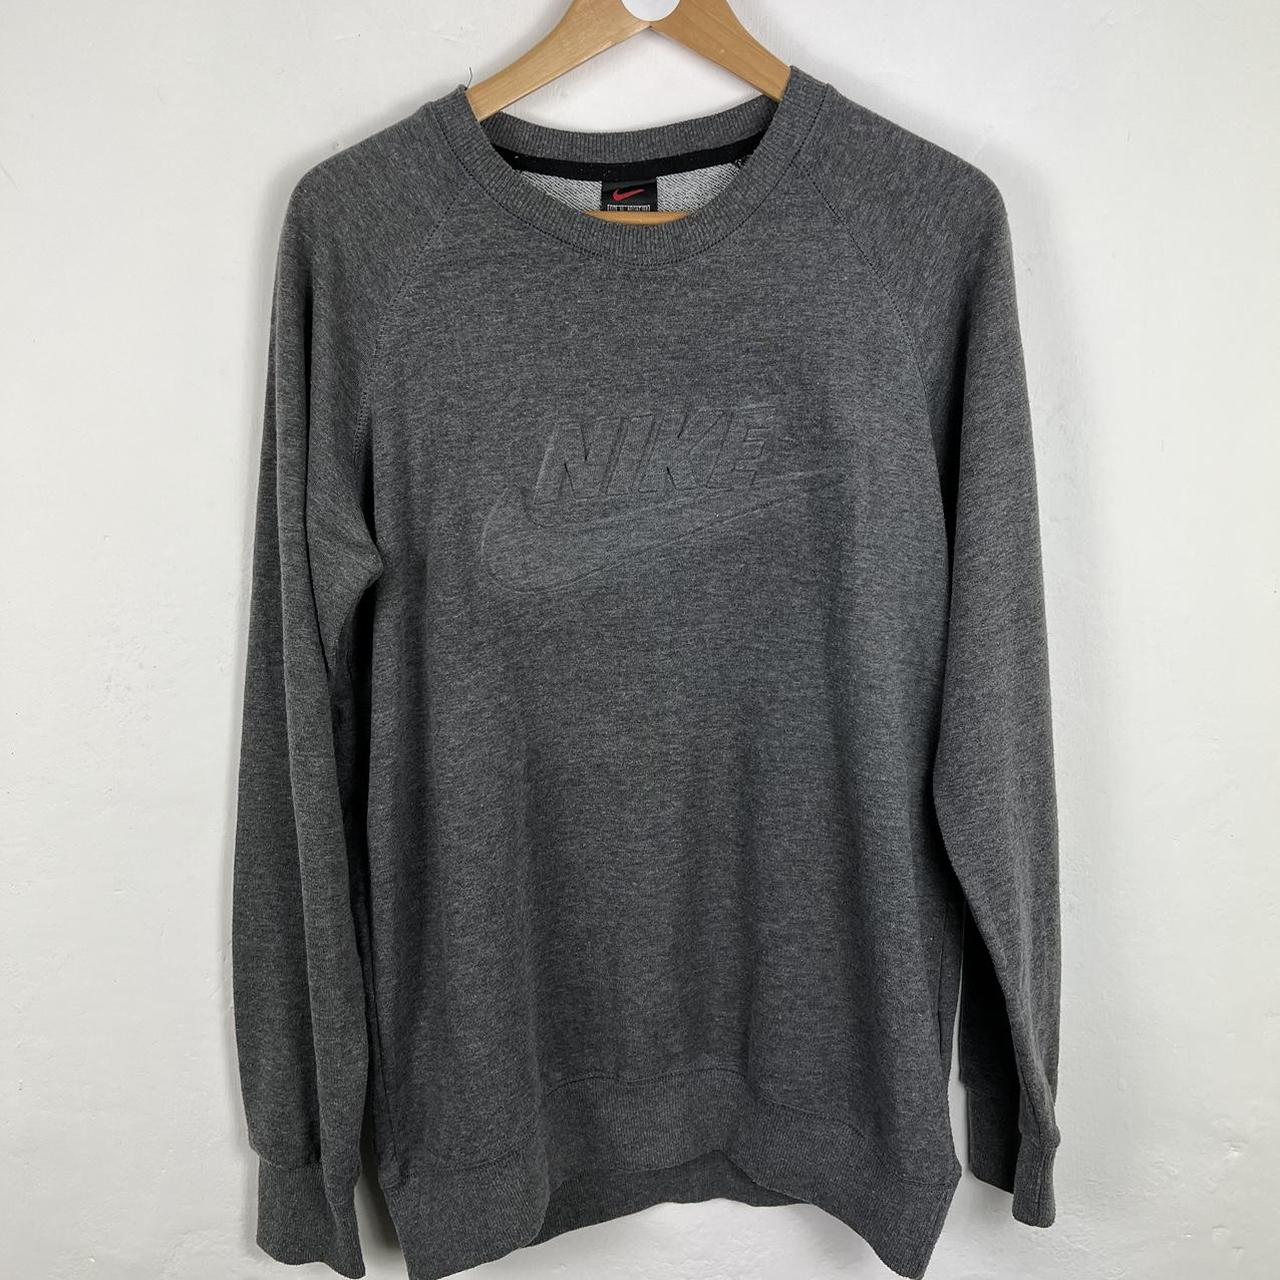 Nike central logo sweatshirt medium